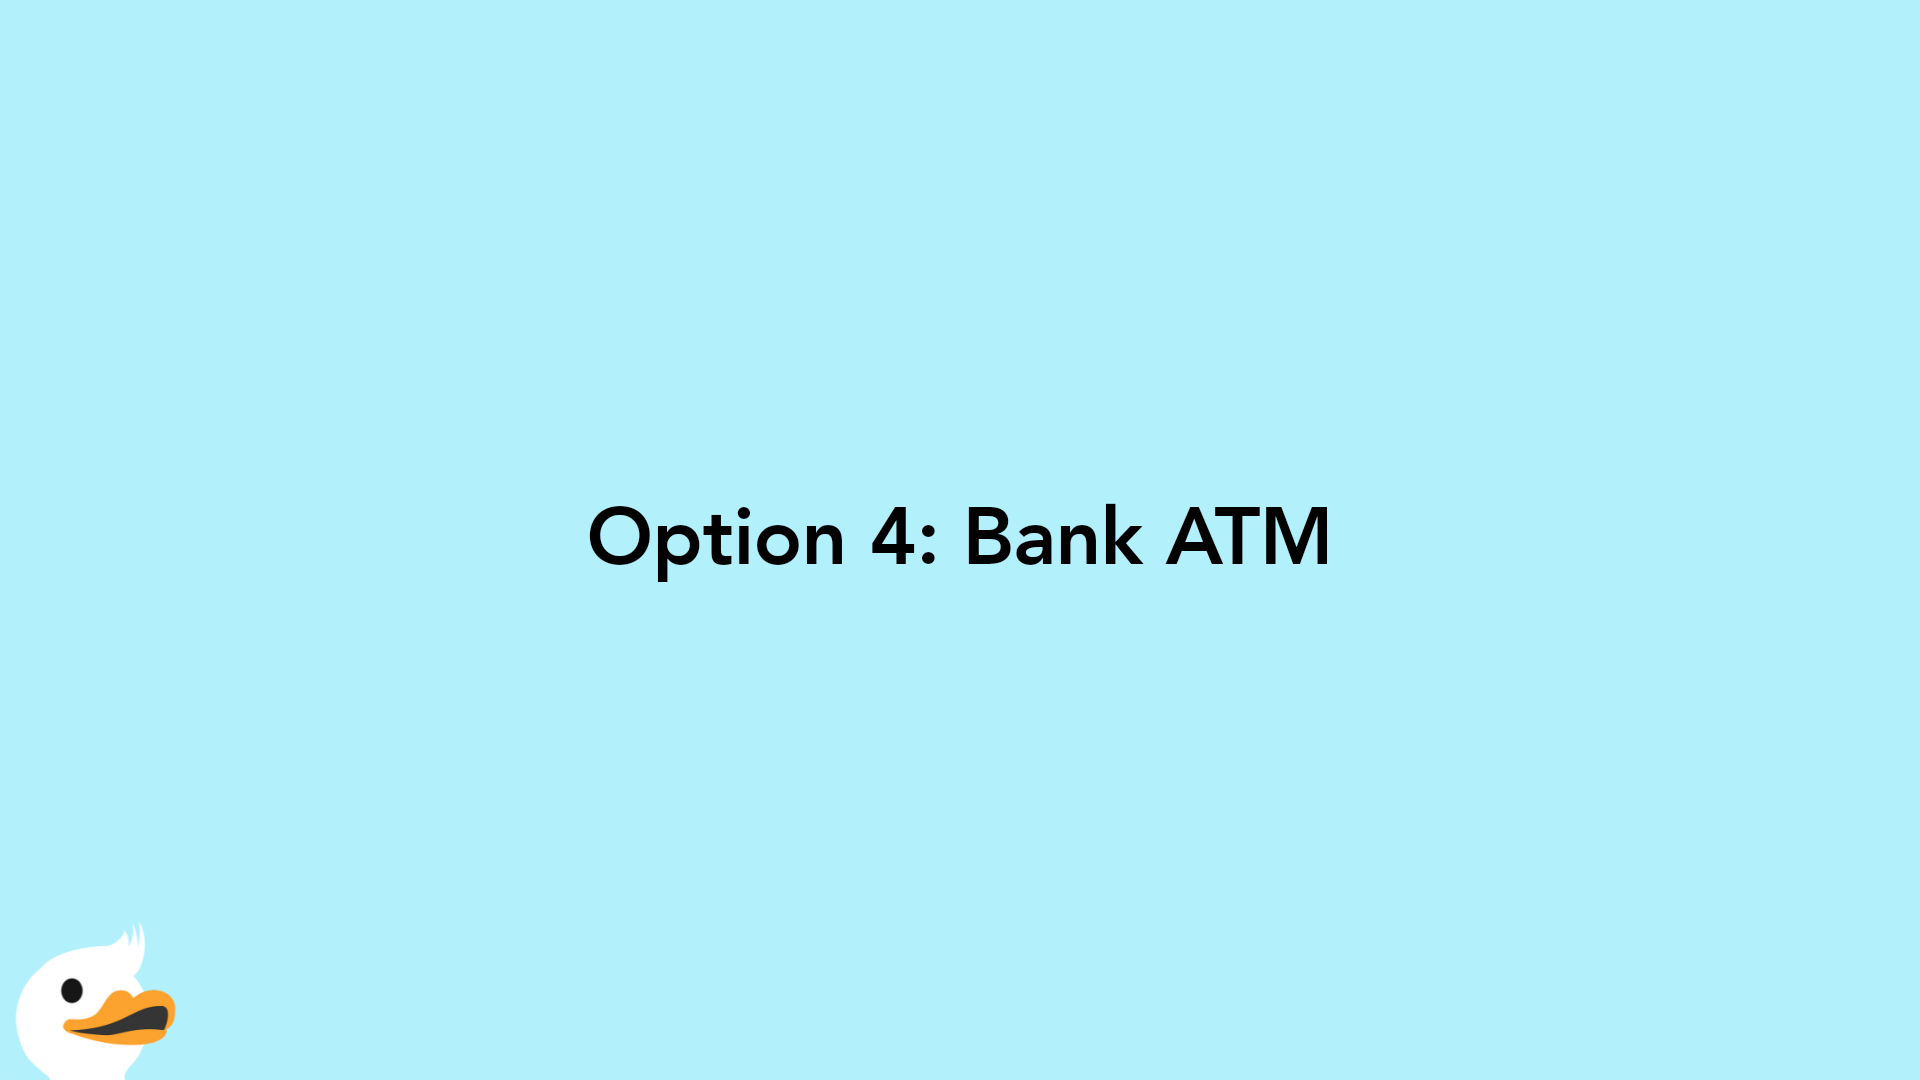 Option 4: Bank ATM